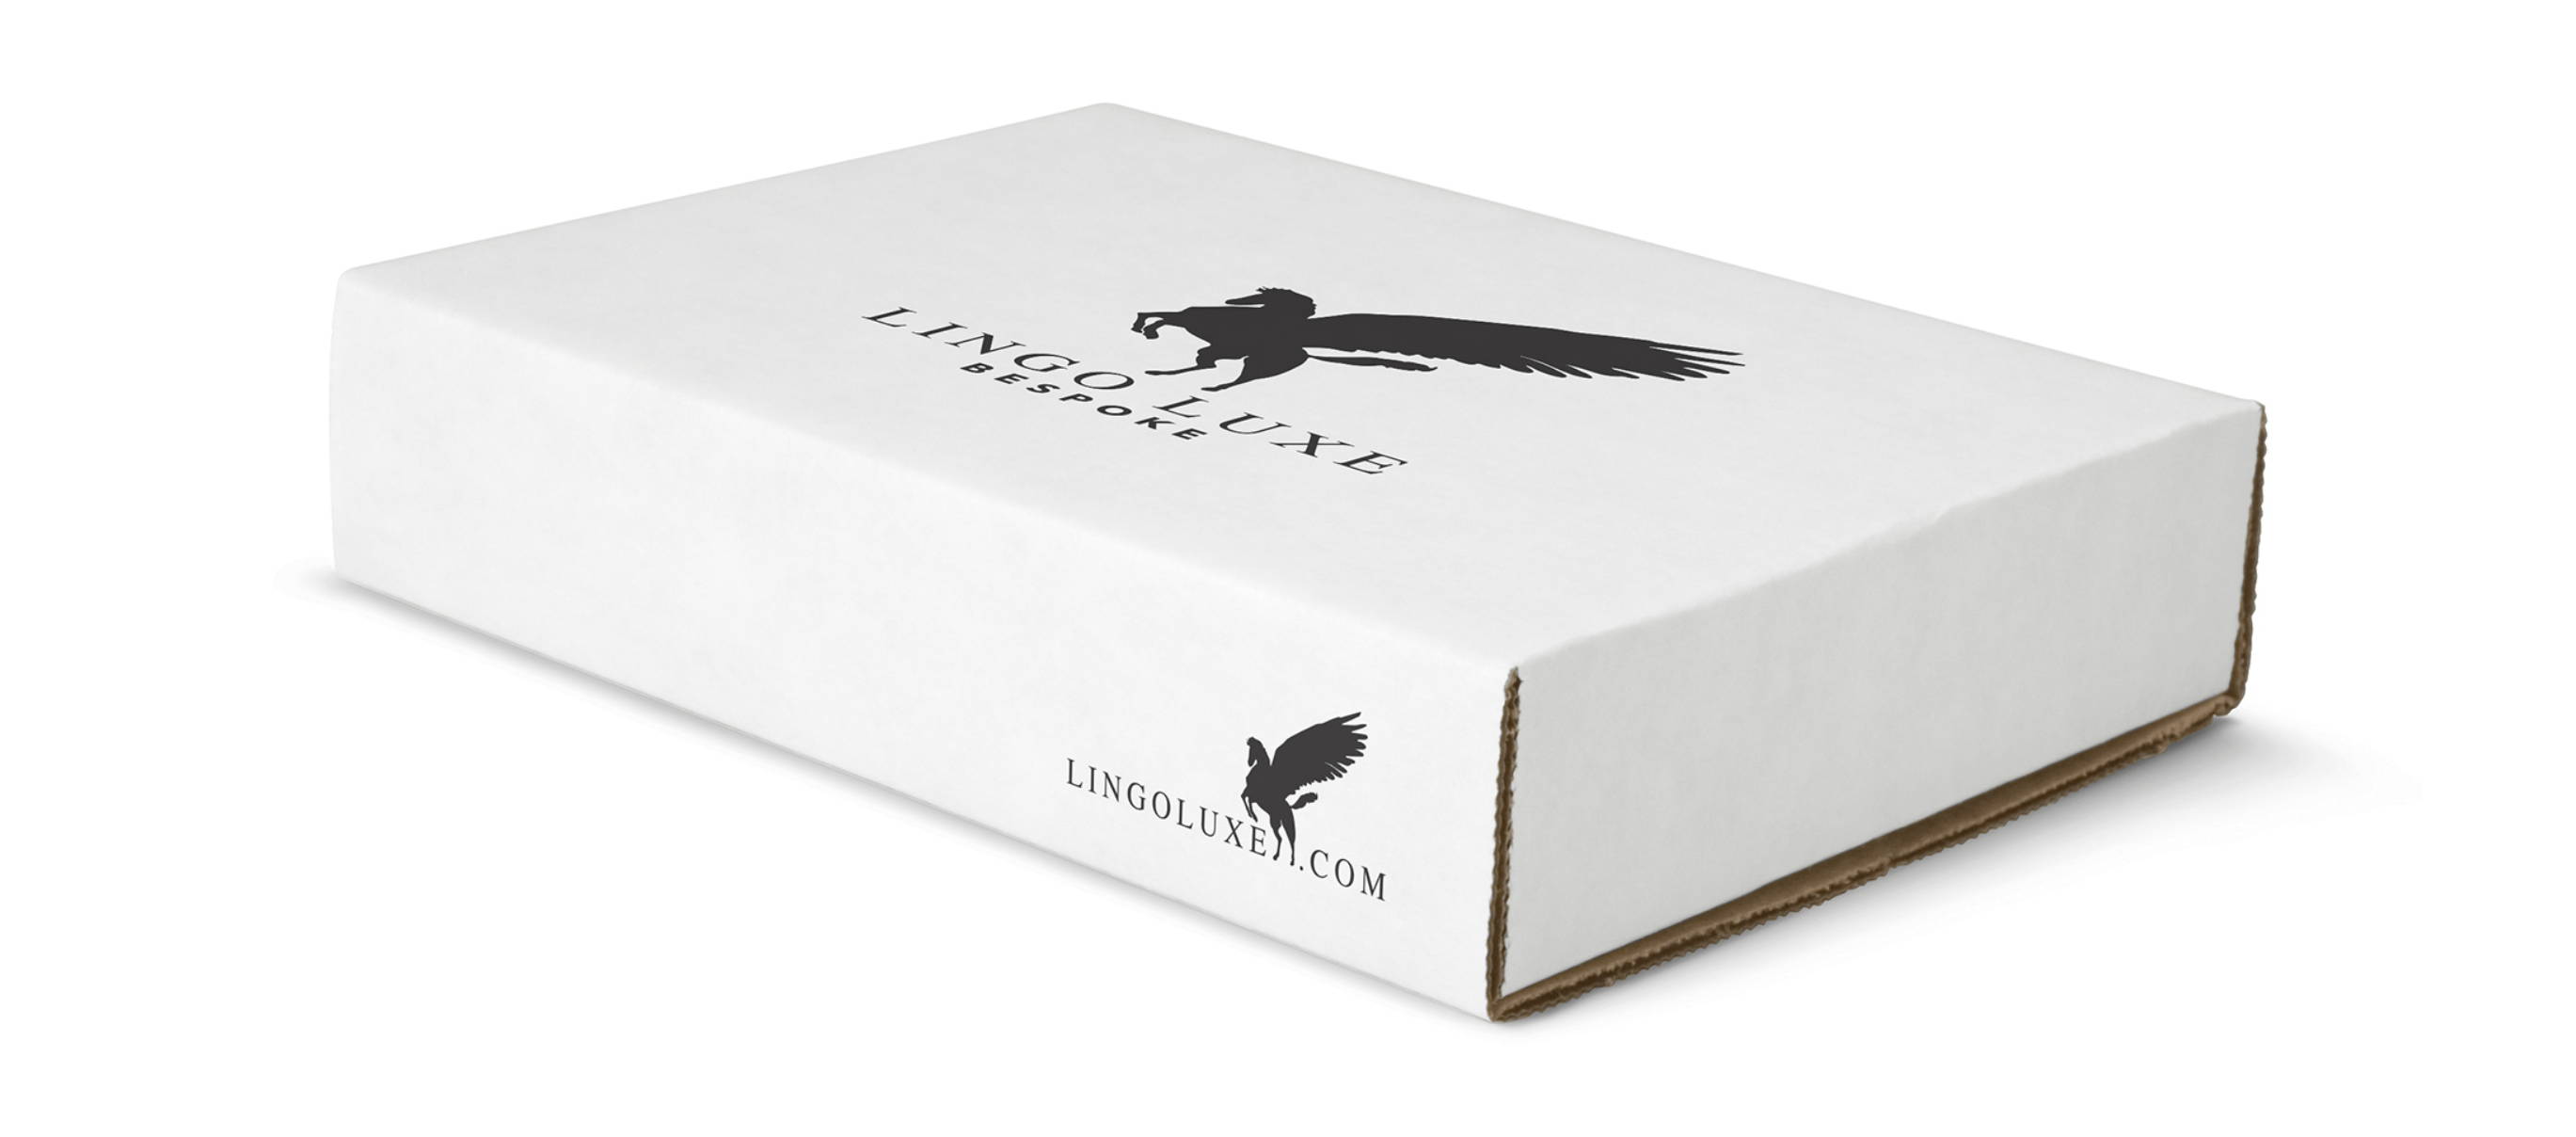 Lingo Luxe Bespoke shipping box with pegasus logo